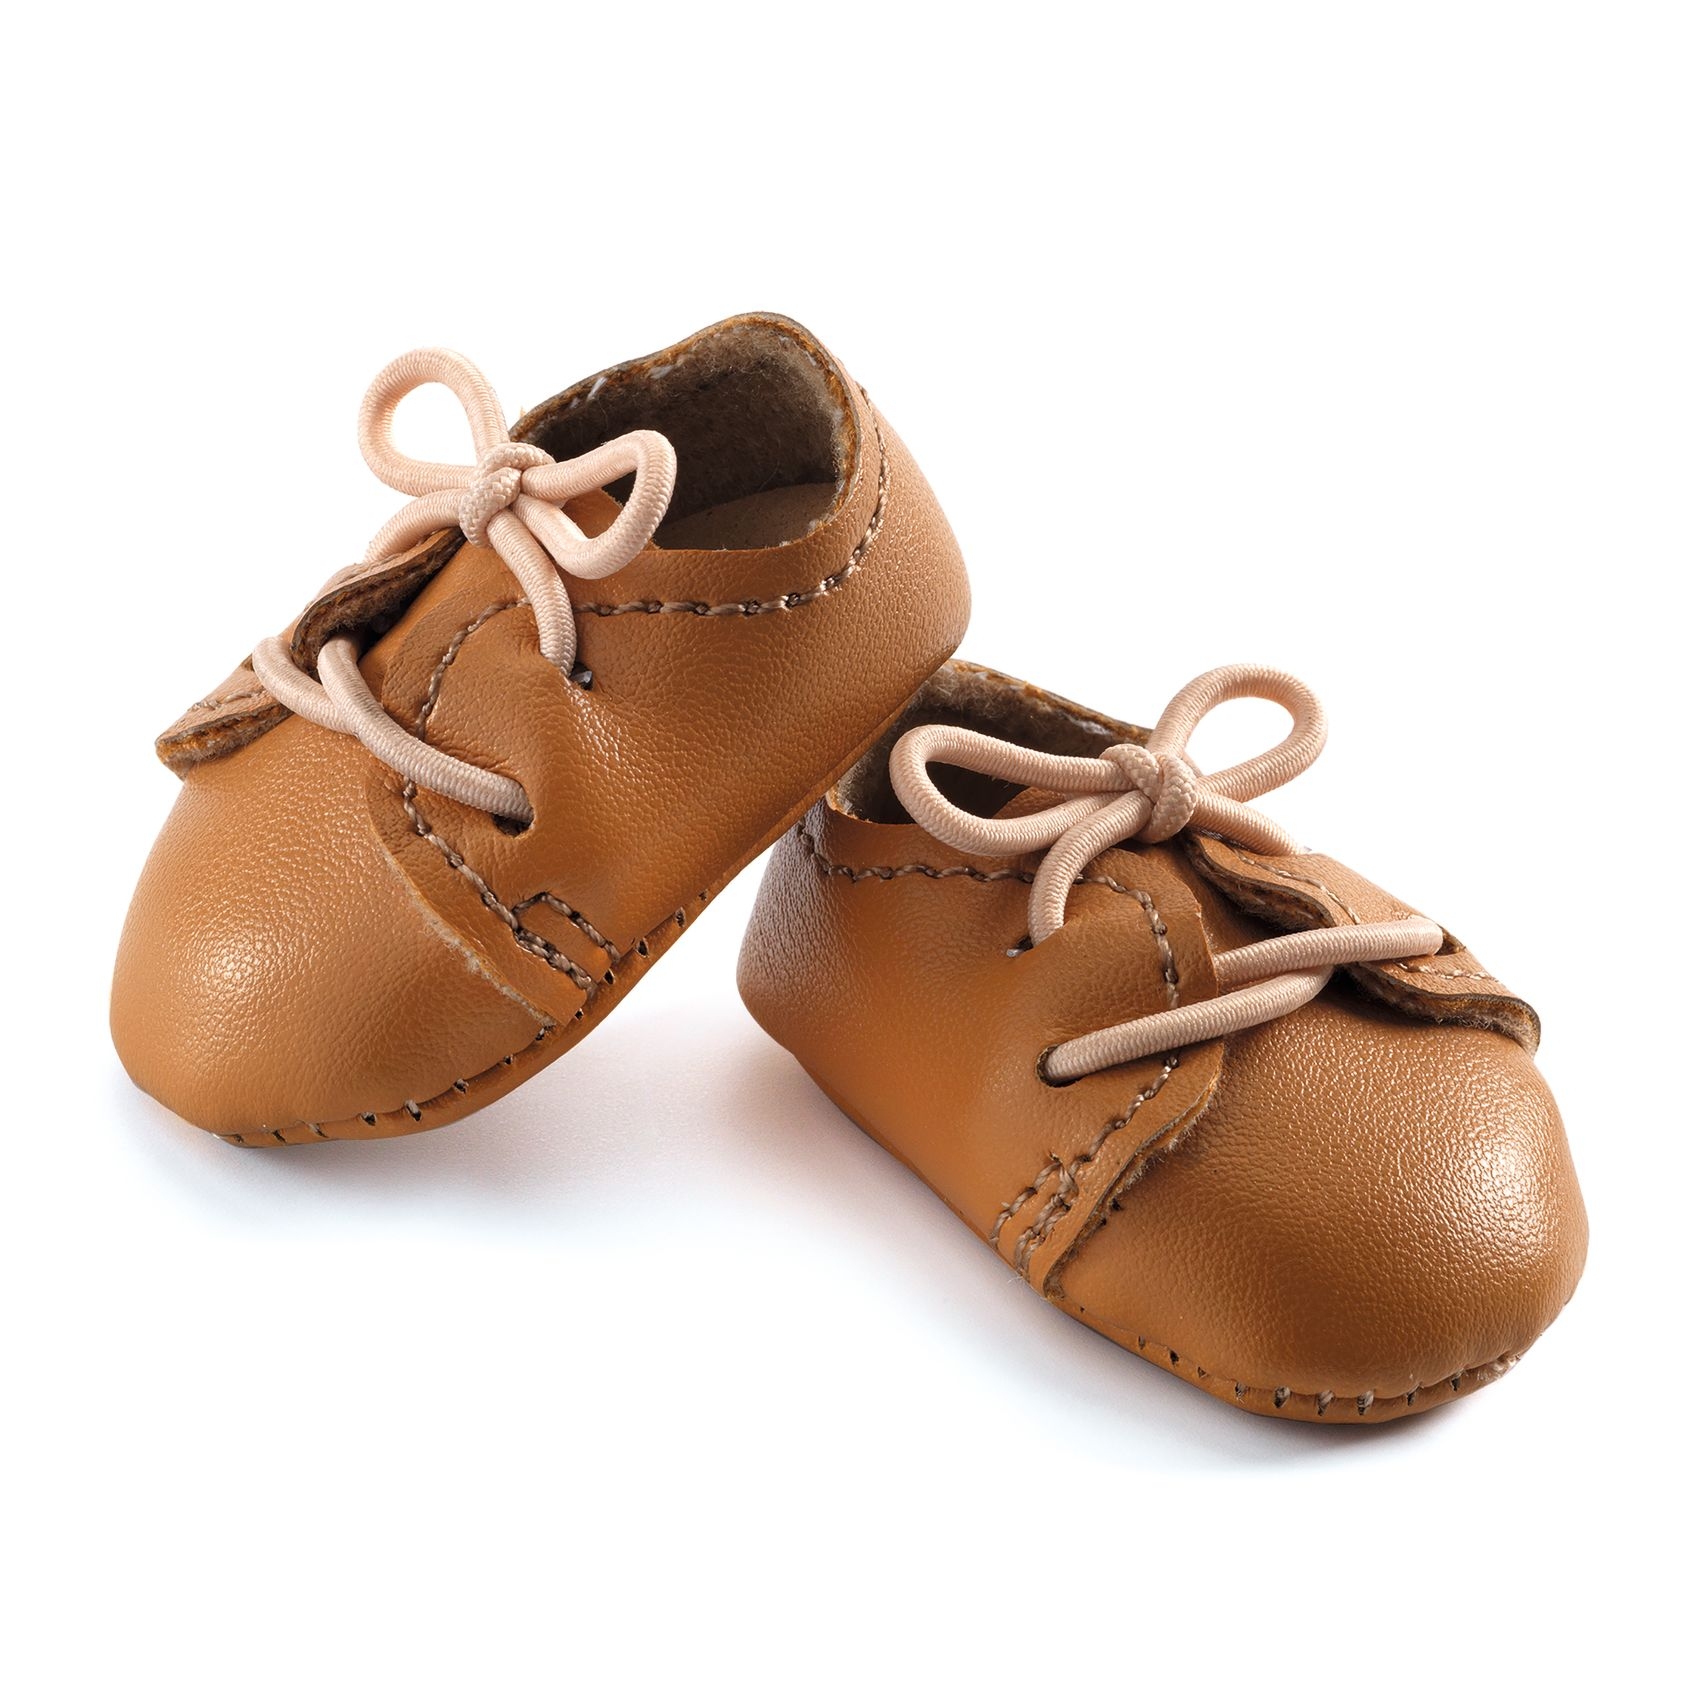 Játékbaba cipő - Barna cipőcske - Brown shoes - 0